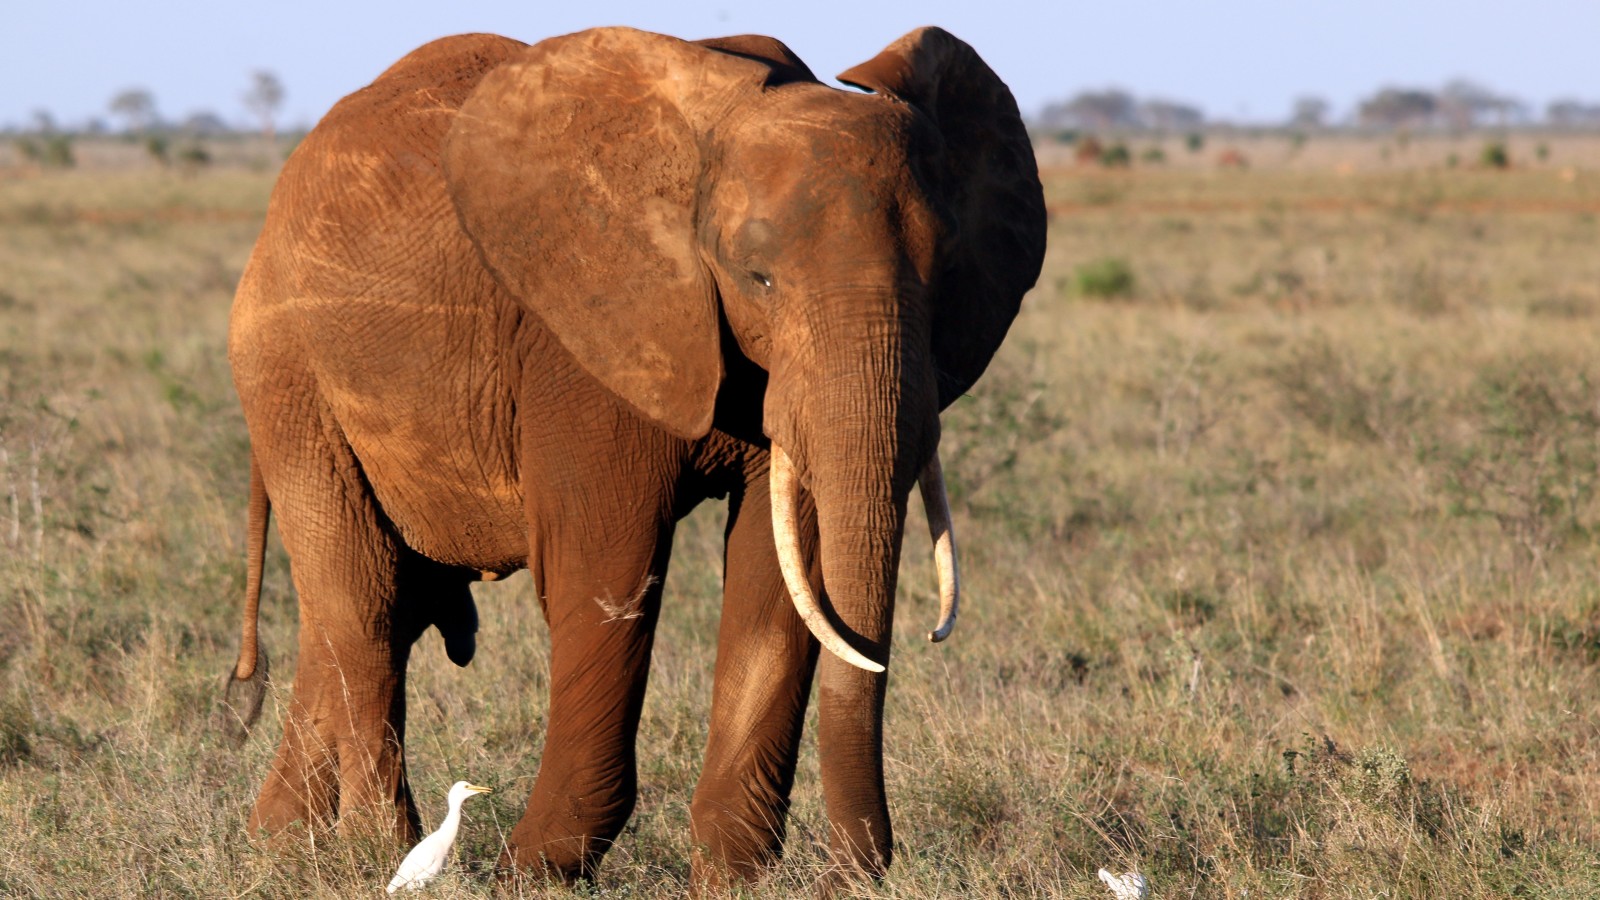 Up close shot of elephant standing in grassland in Kenya